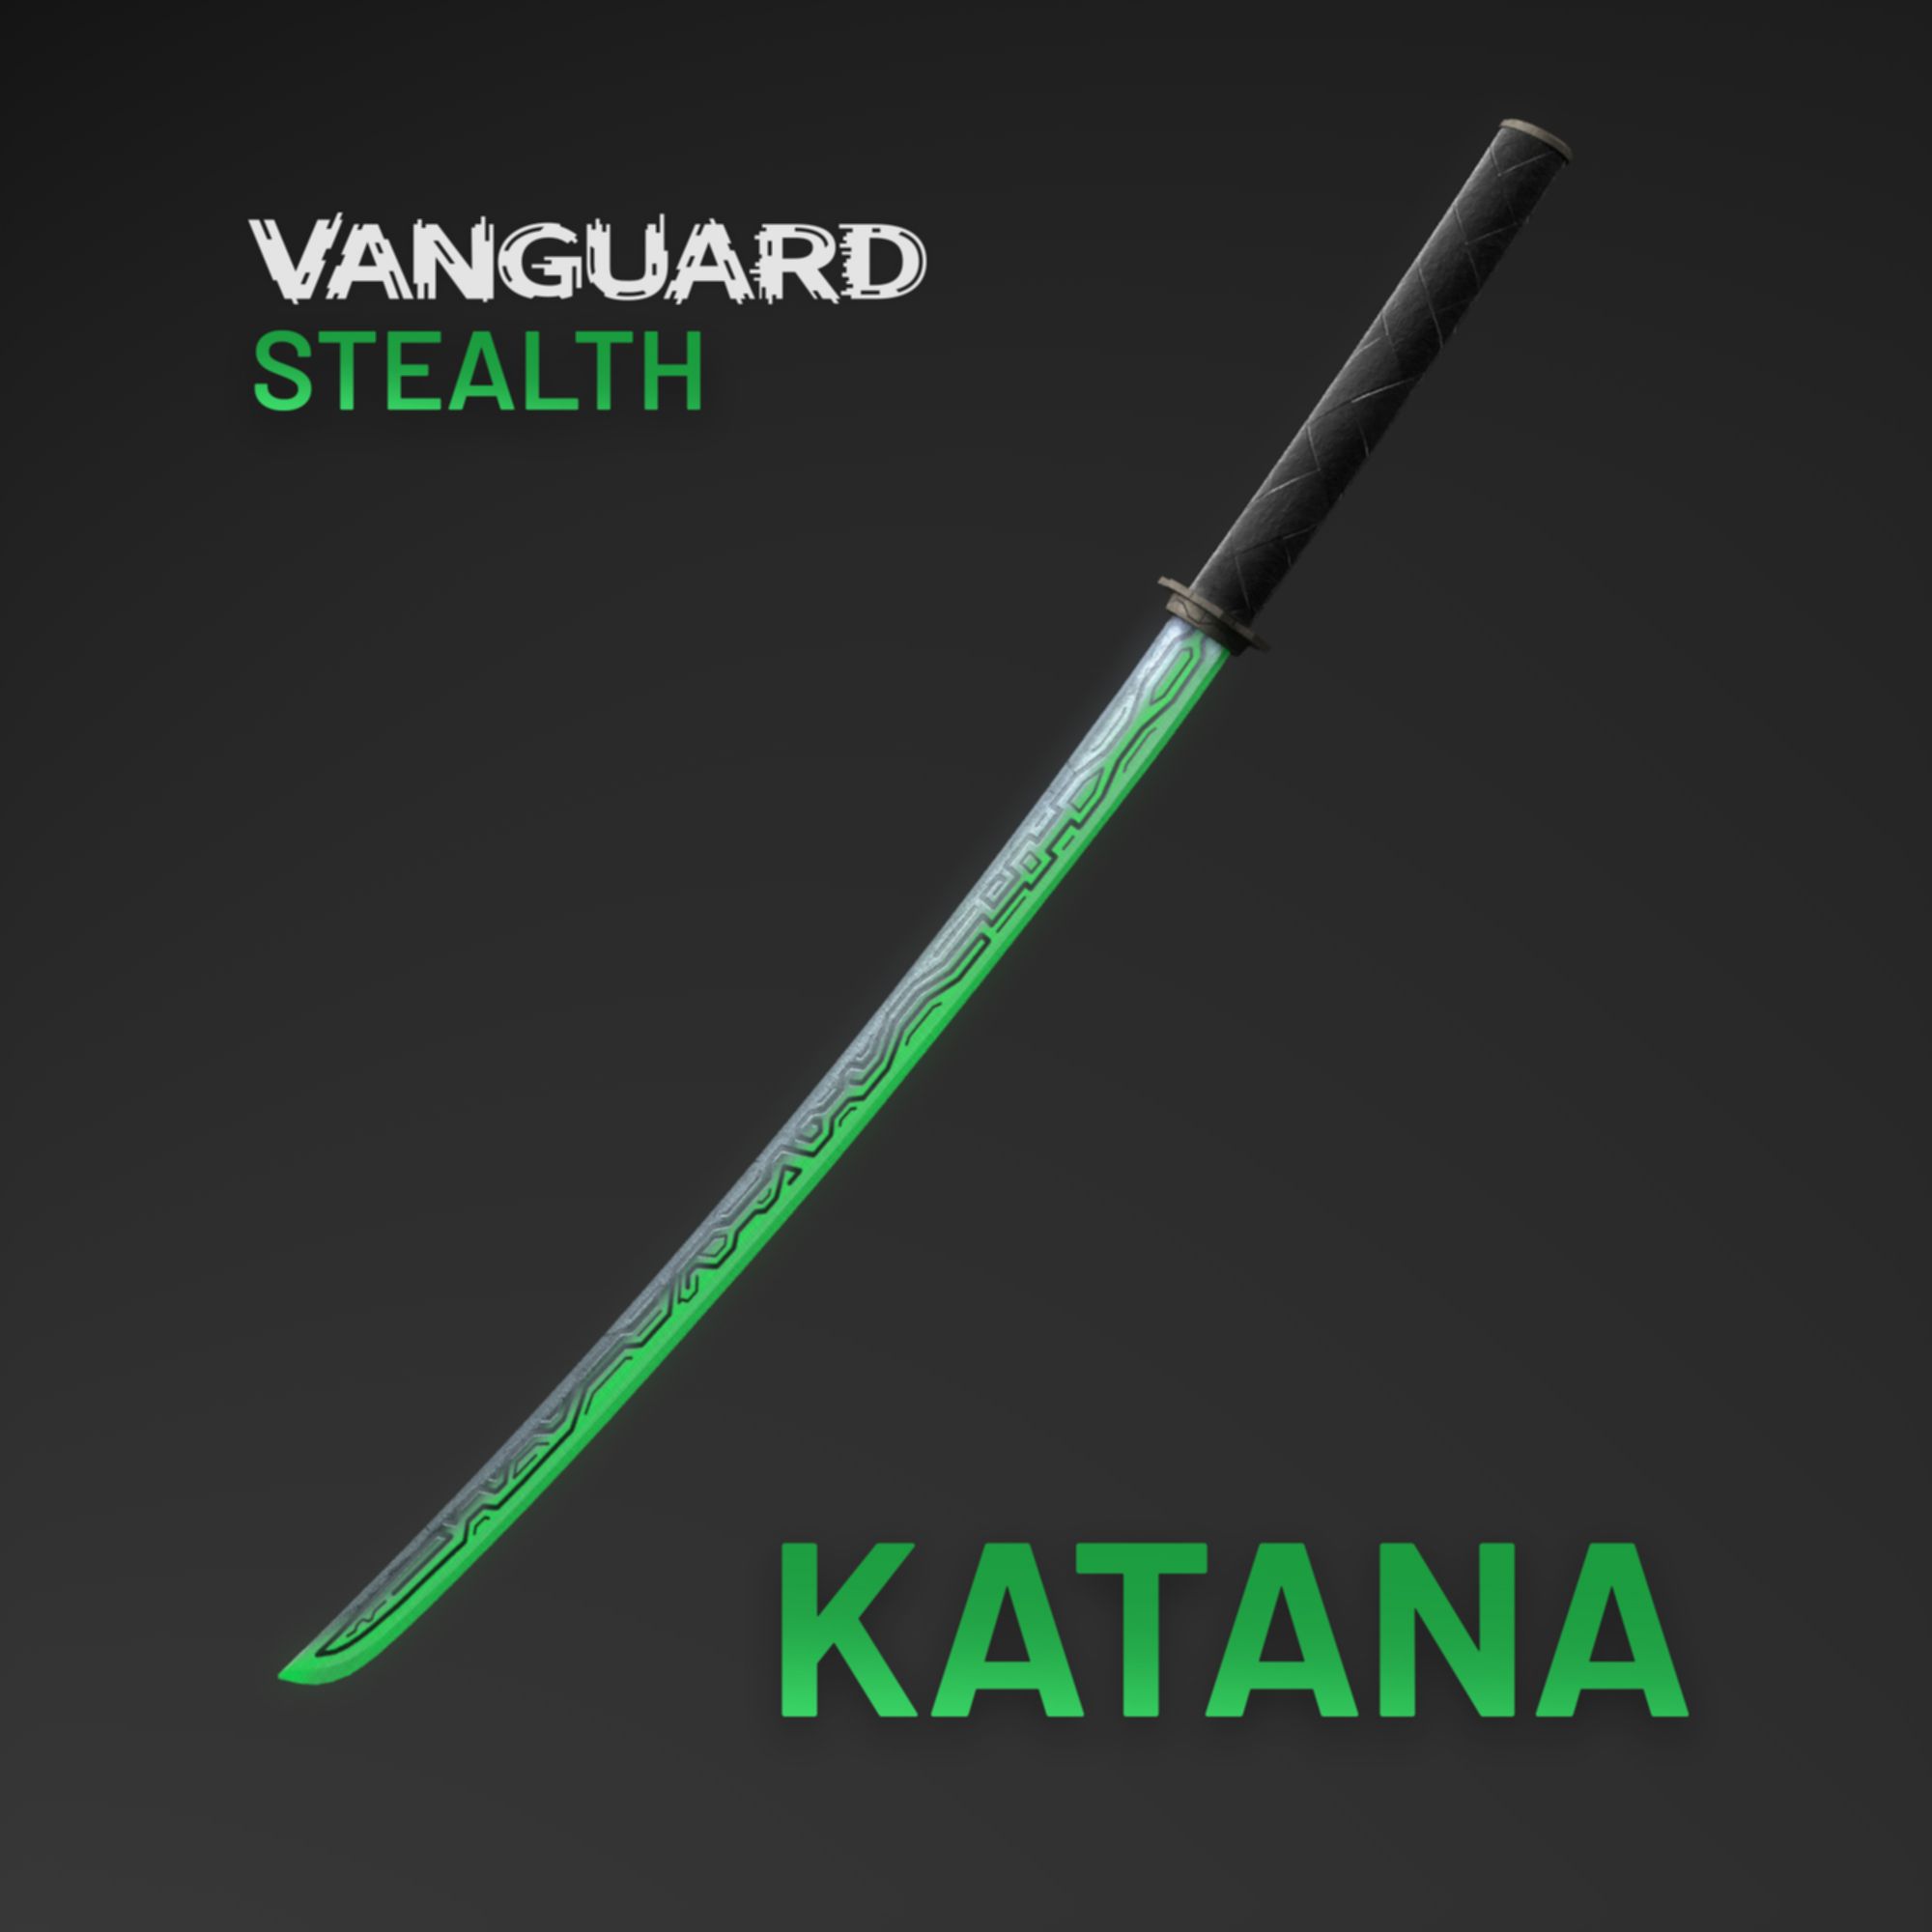 Vanguard Stealth Katana